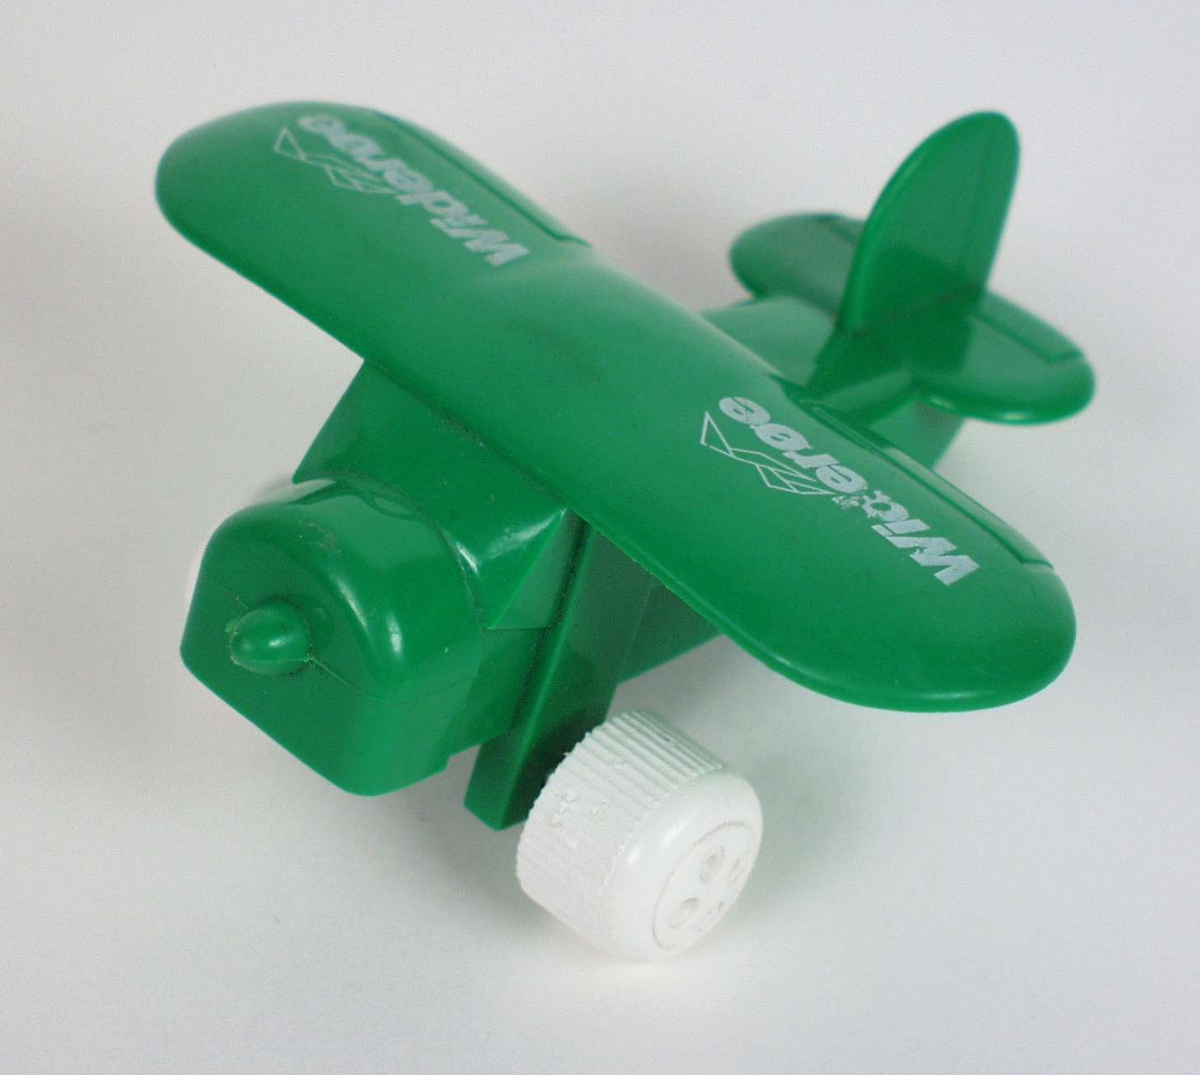 Grønt lekefly i plast.